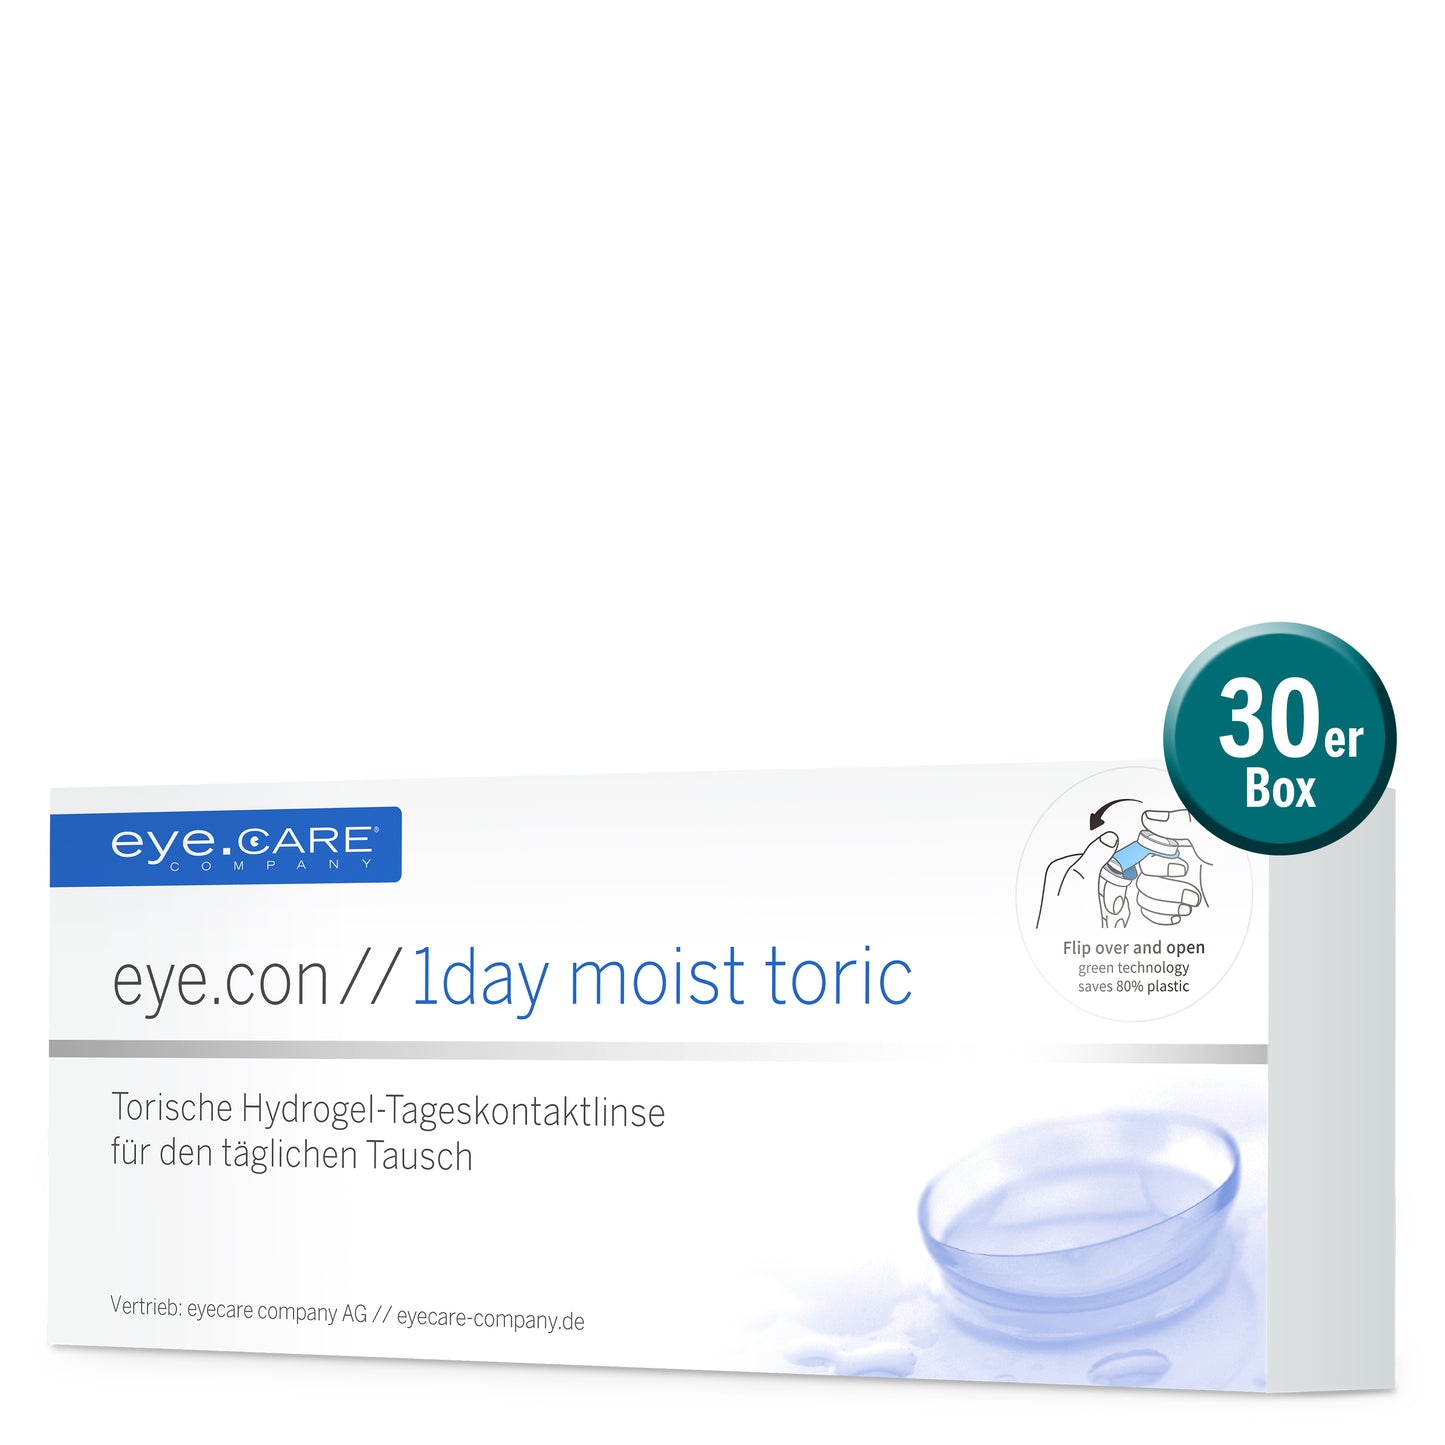 eye.con // 1day moist toric 30er Box